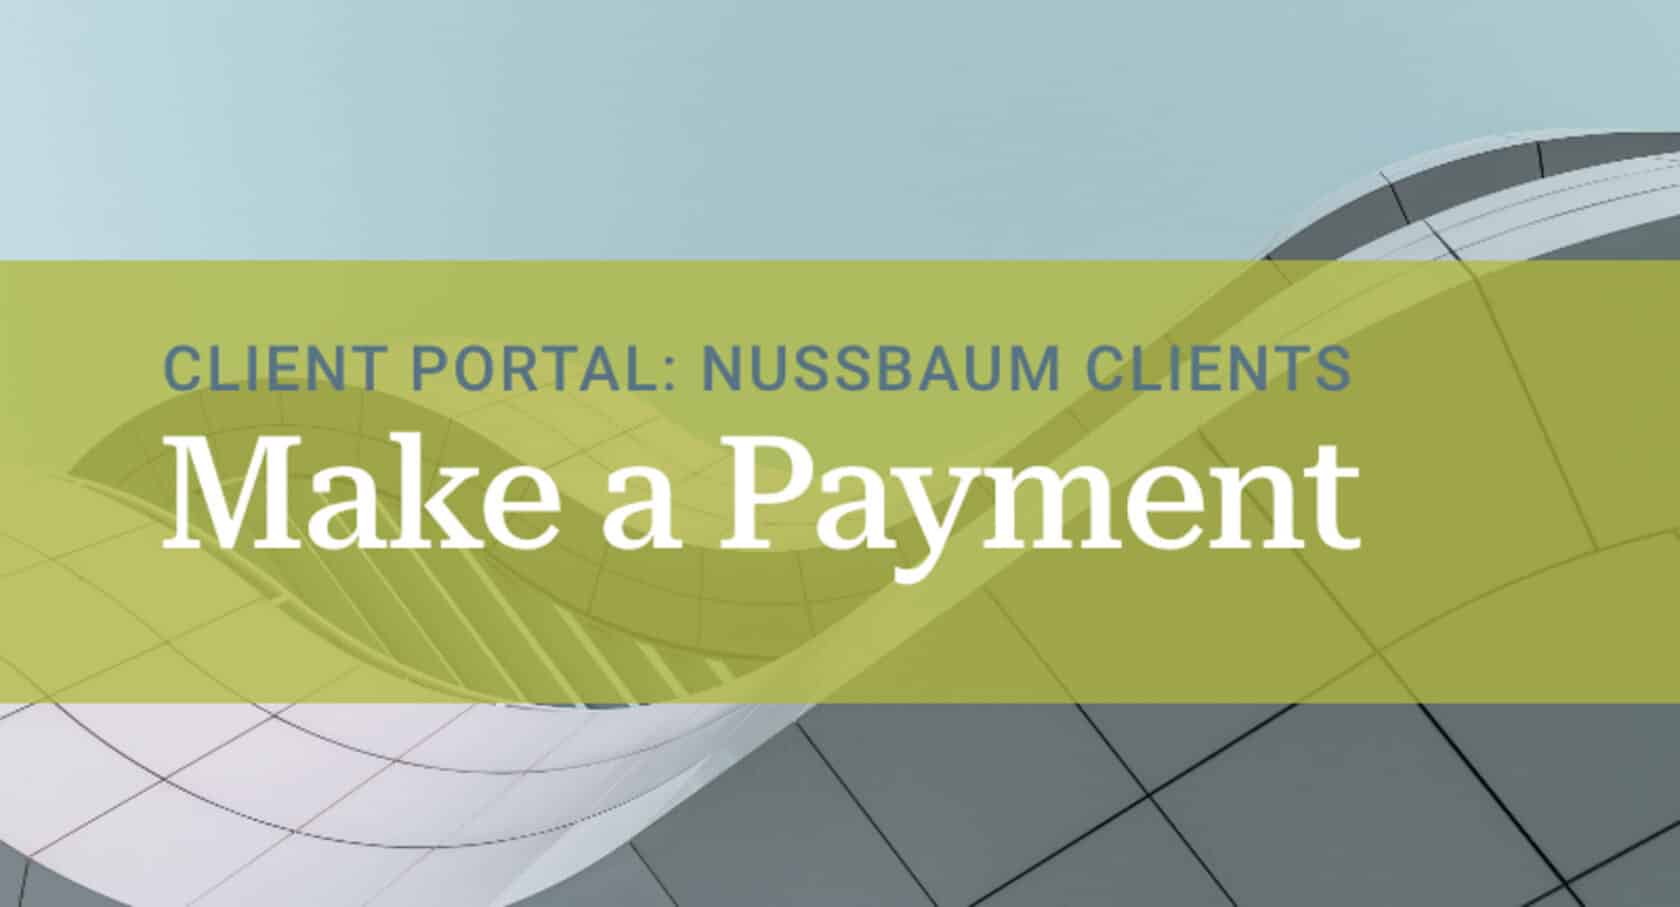 Nussbaum Clients make a payment.